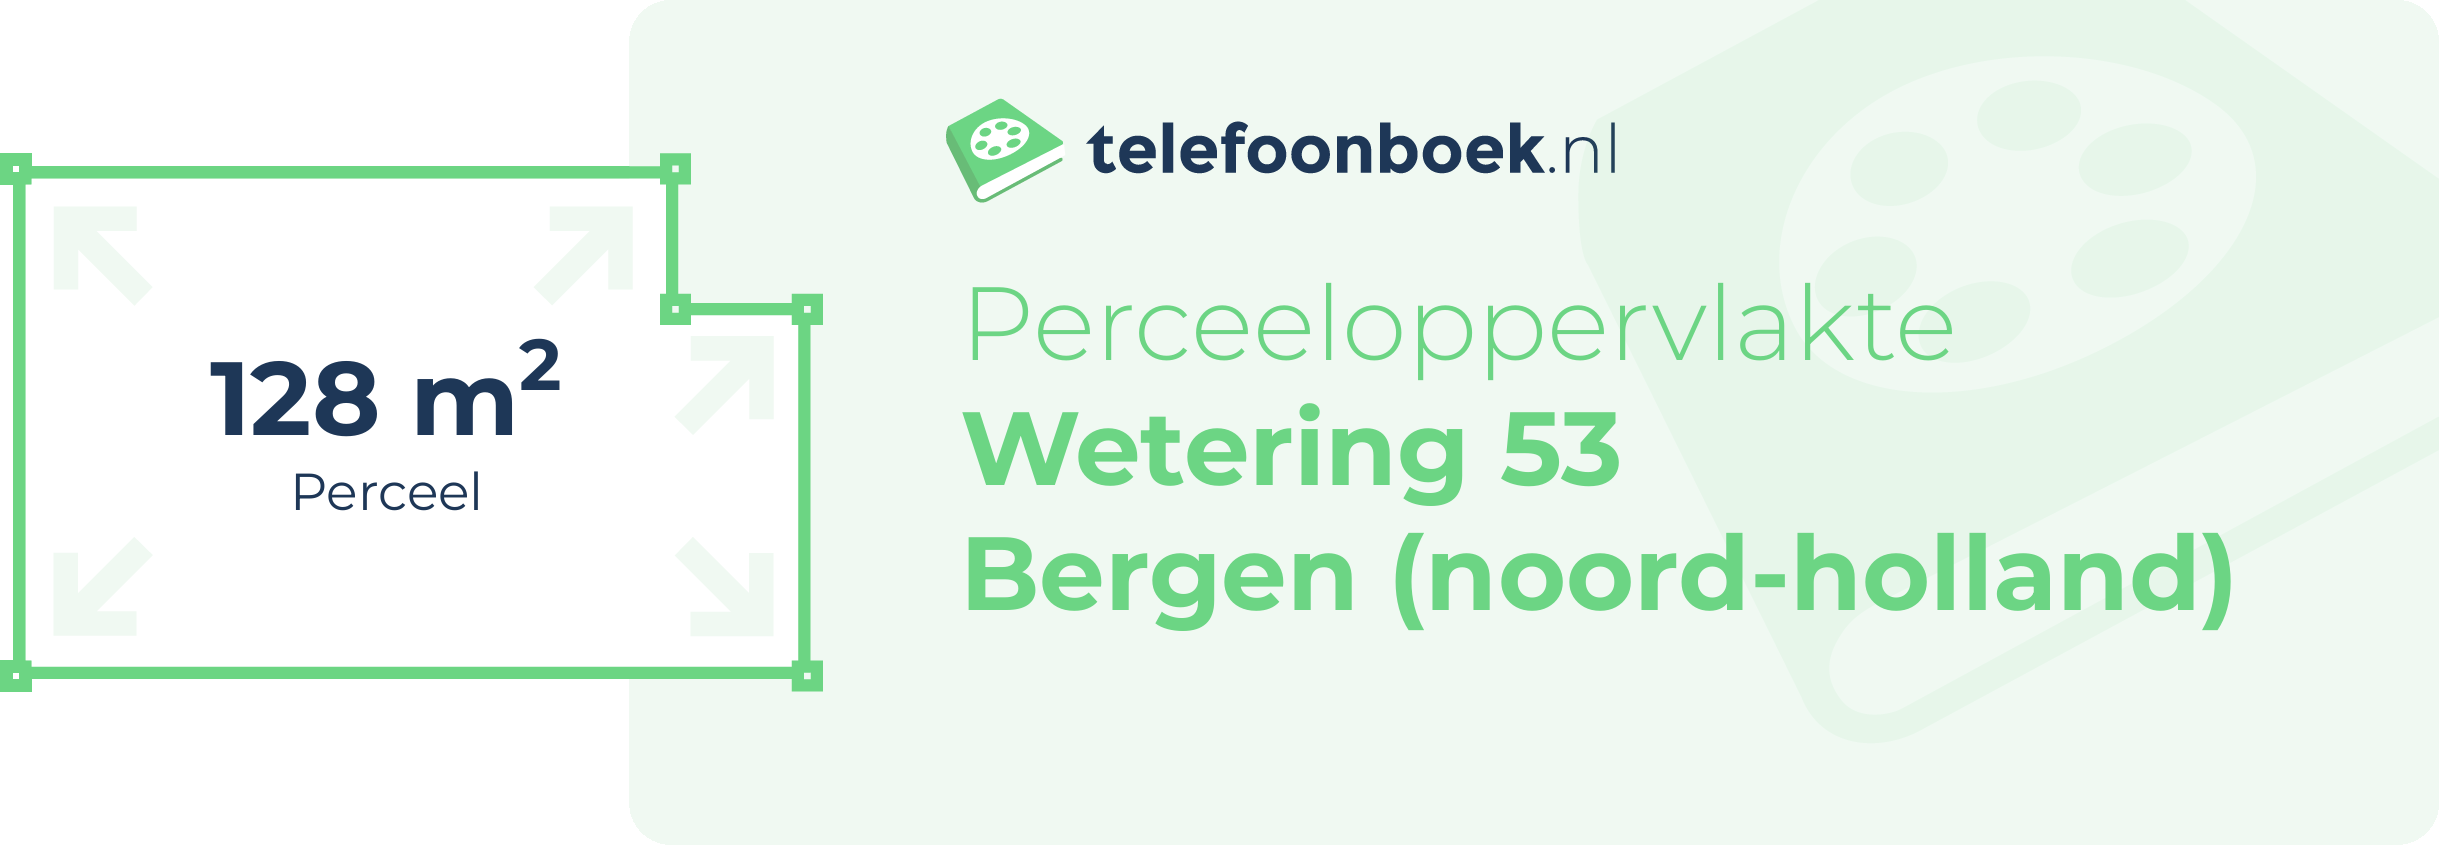 Perceeloppervlakte Wetering 53 Bergen (Noord-Holland)